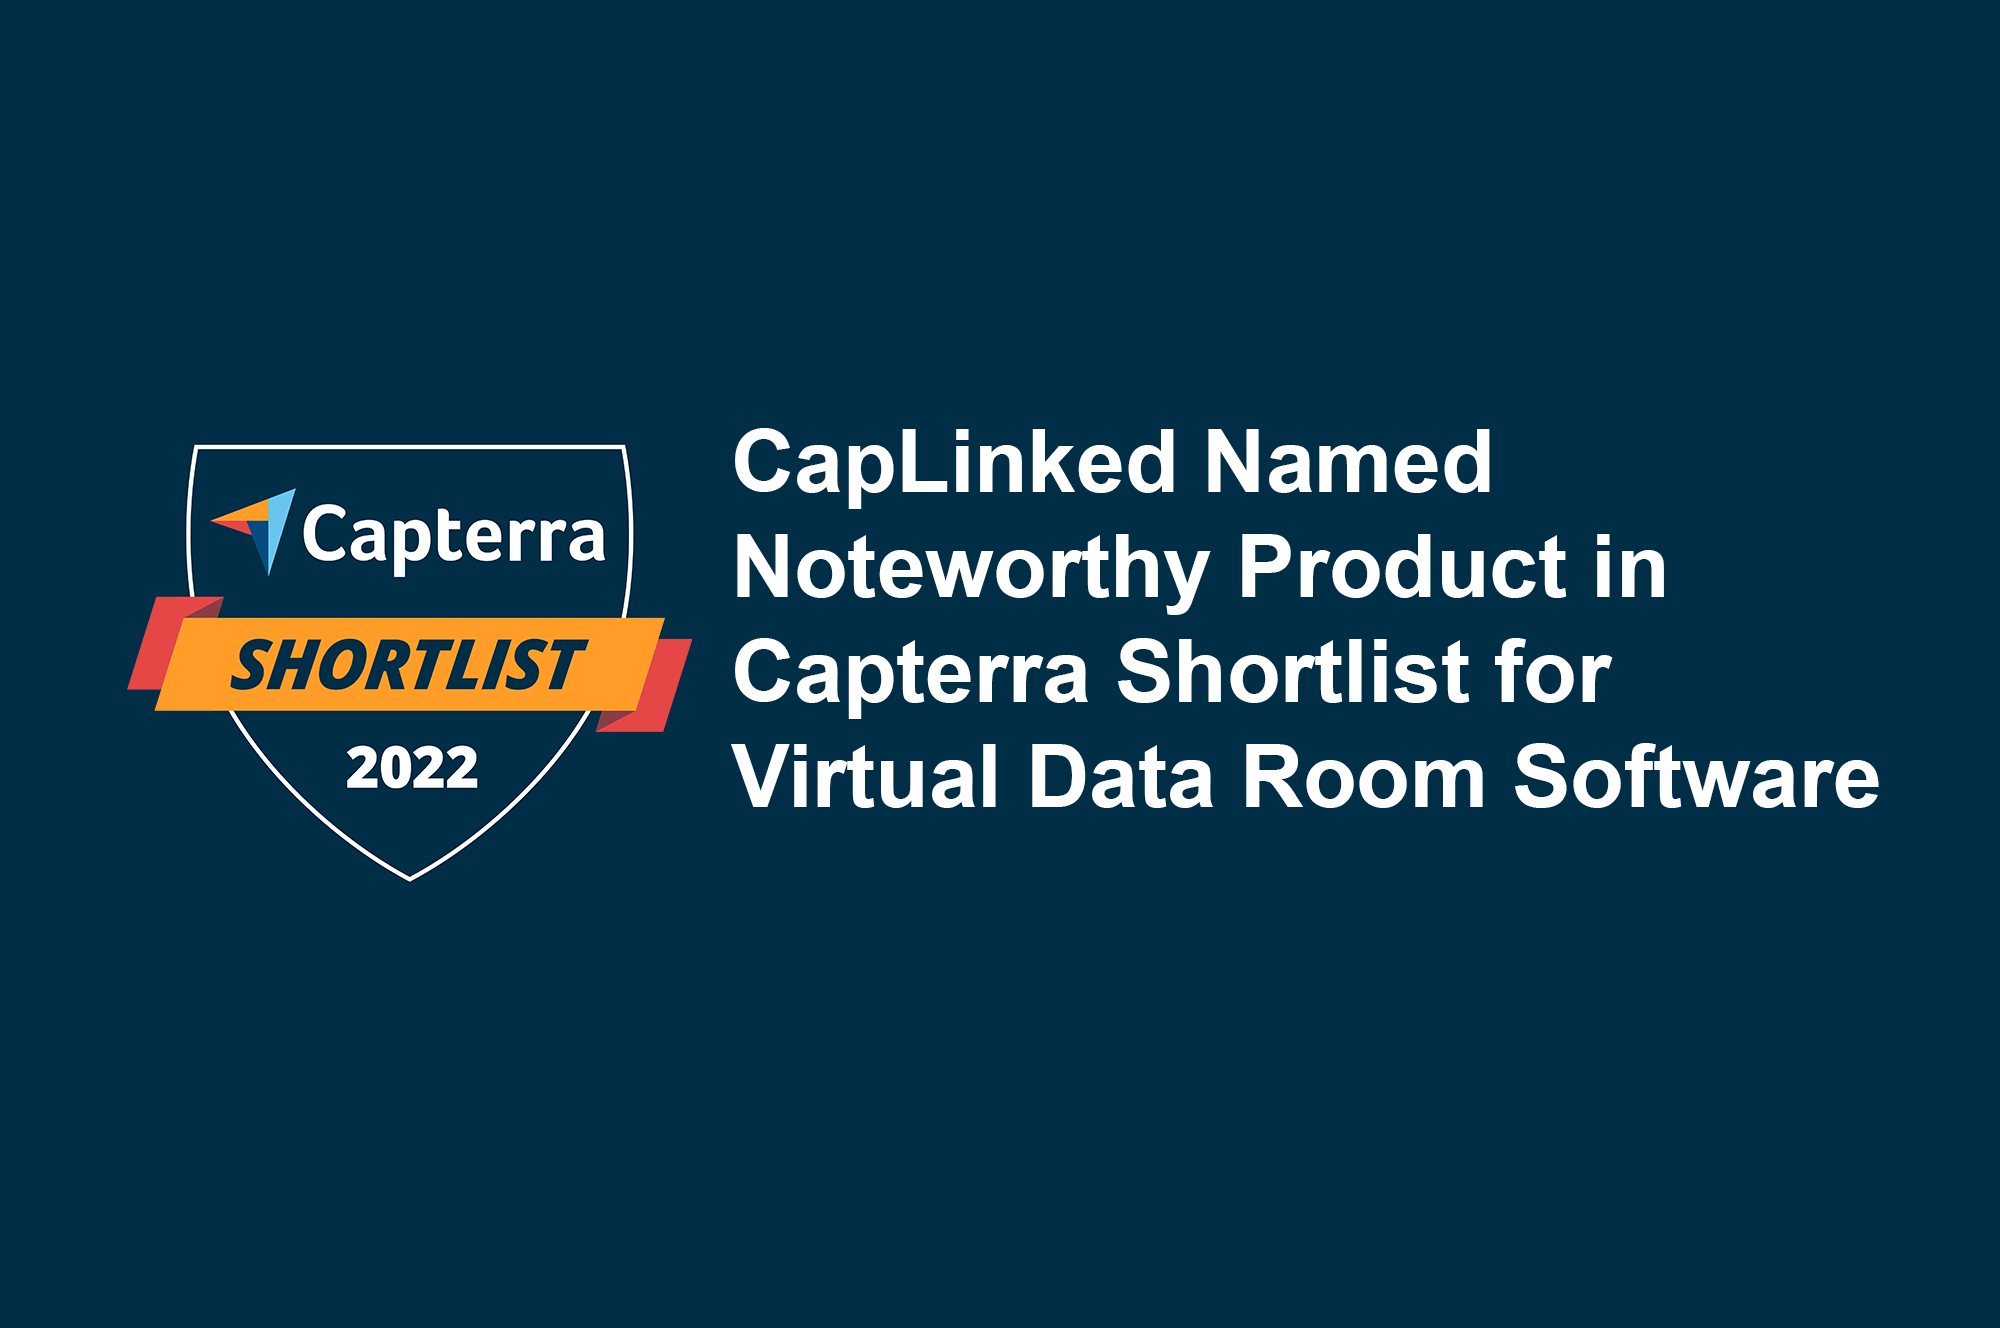 CapLinked Makes Capterra’s 2022 Shortlist